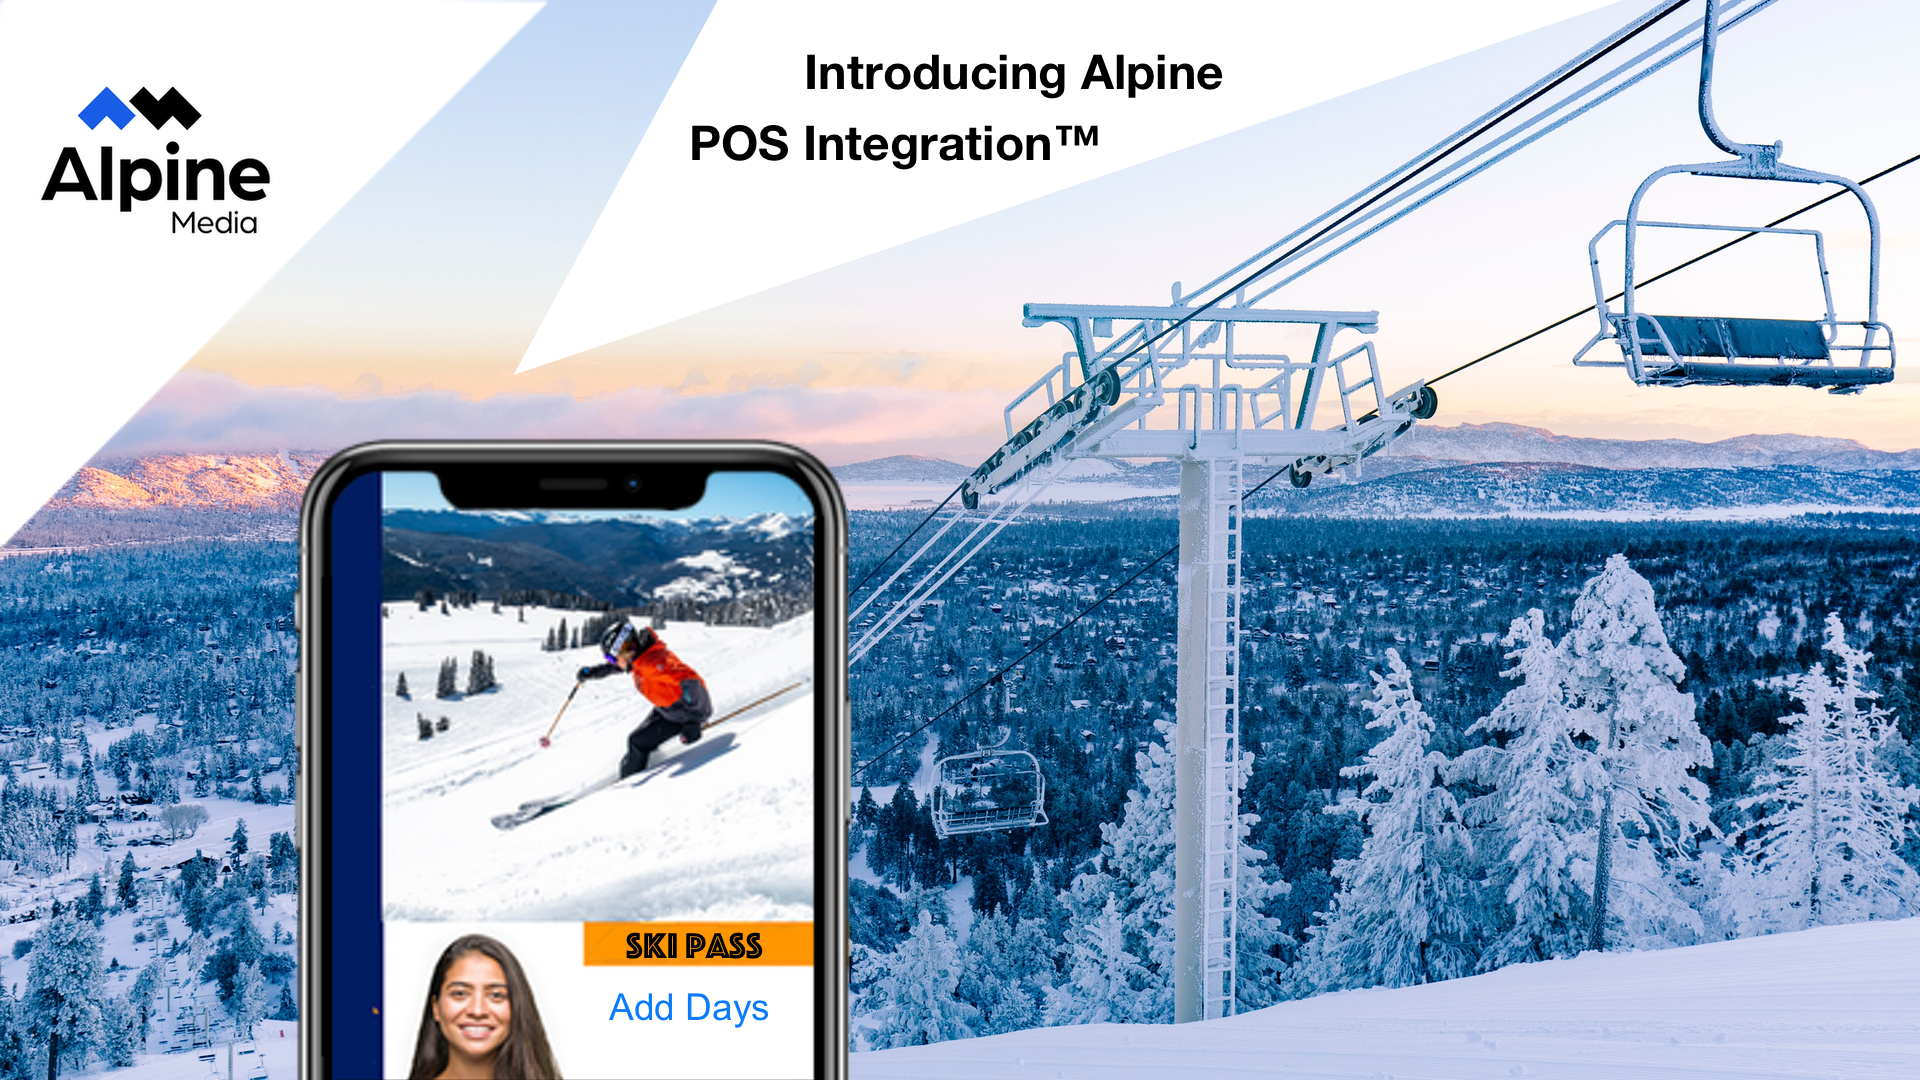 Alpine Media launches Alpine Media POS Integration™